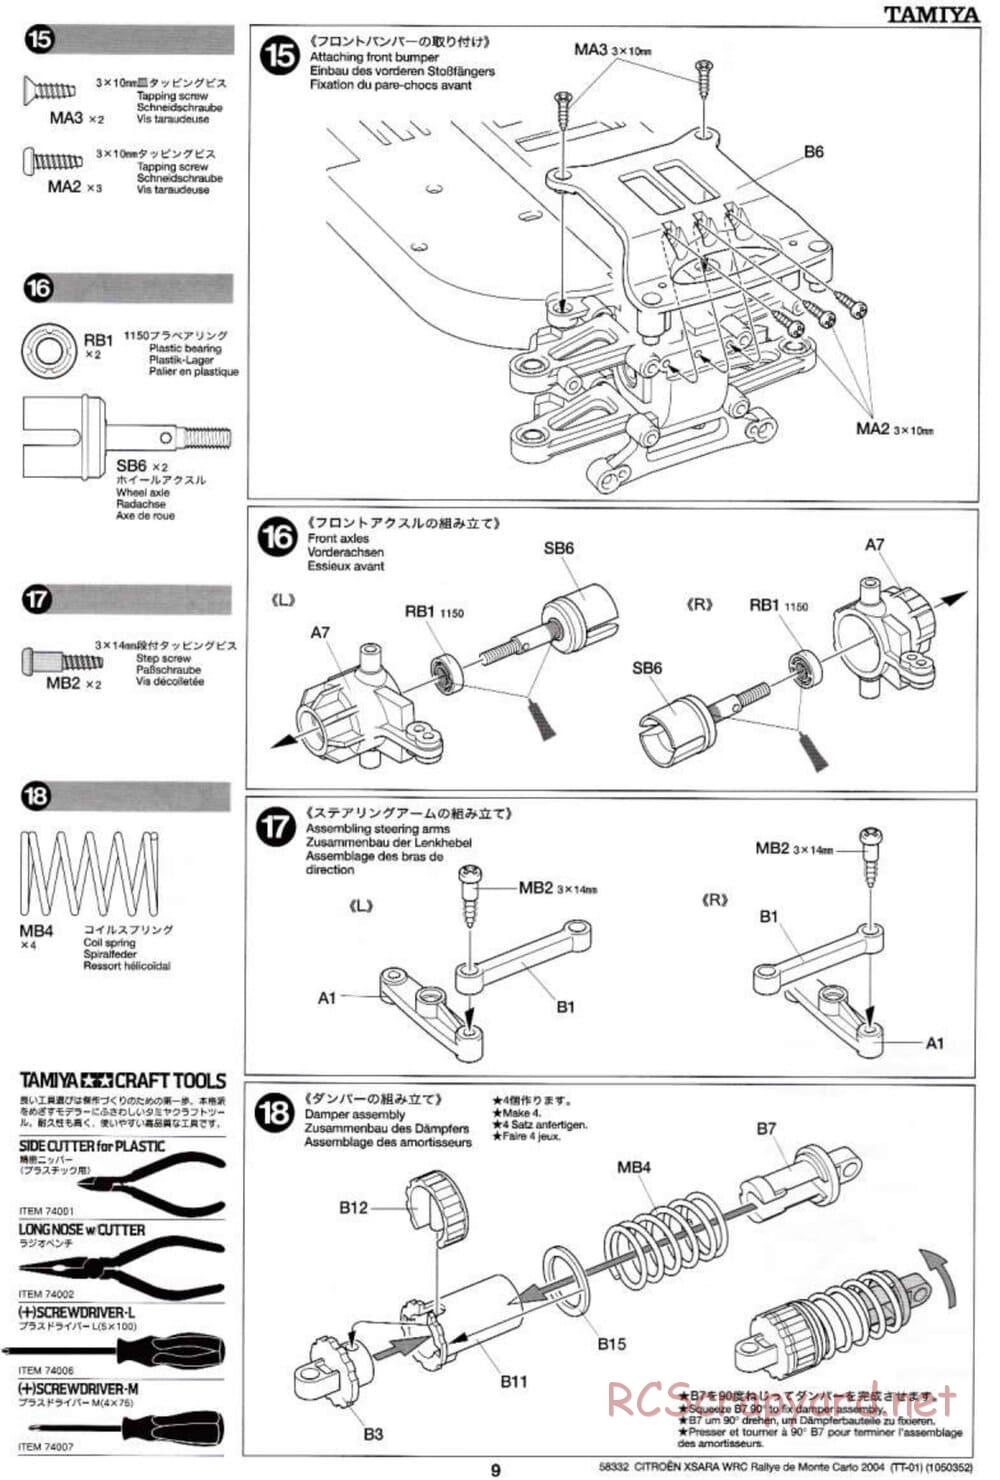 Tamiya - Citroen Xsara WRC Rallye De Monte Carlo 2004 - TT-01 Chassis - Manual - Page 9